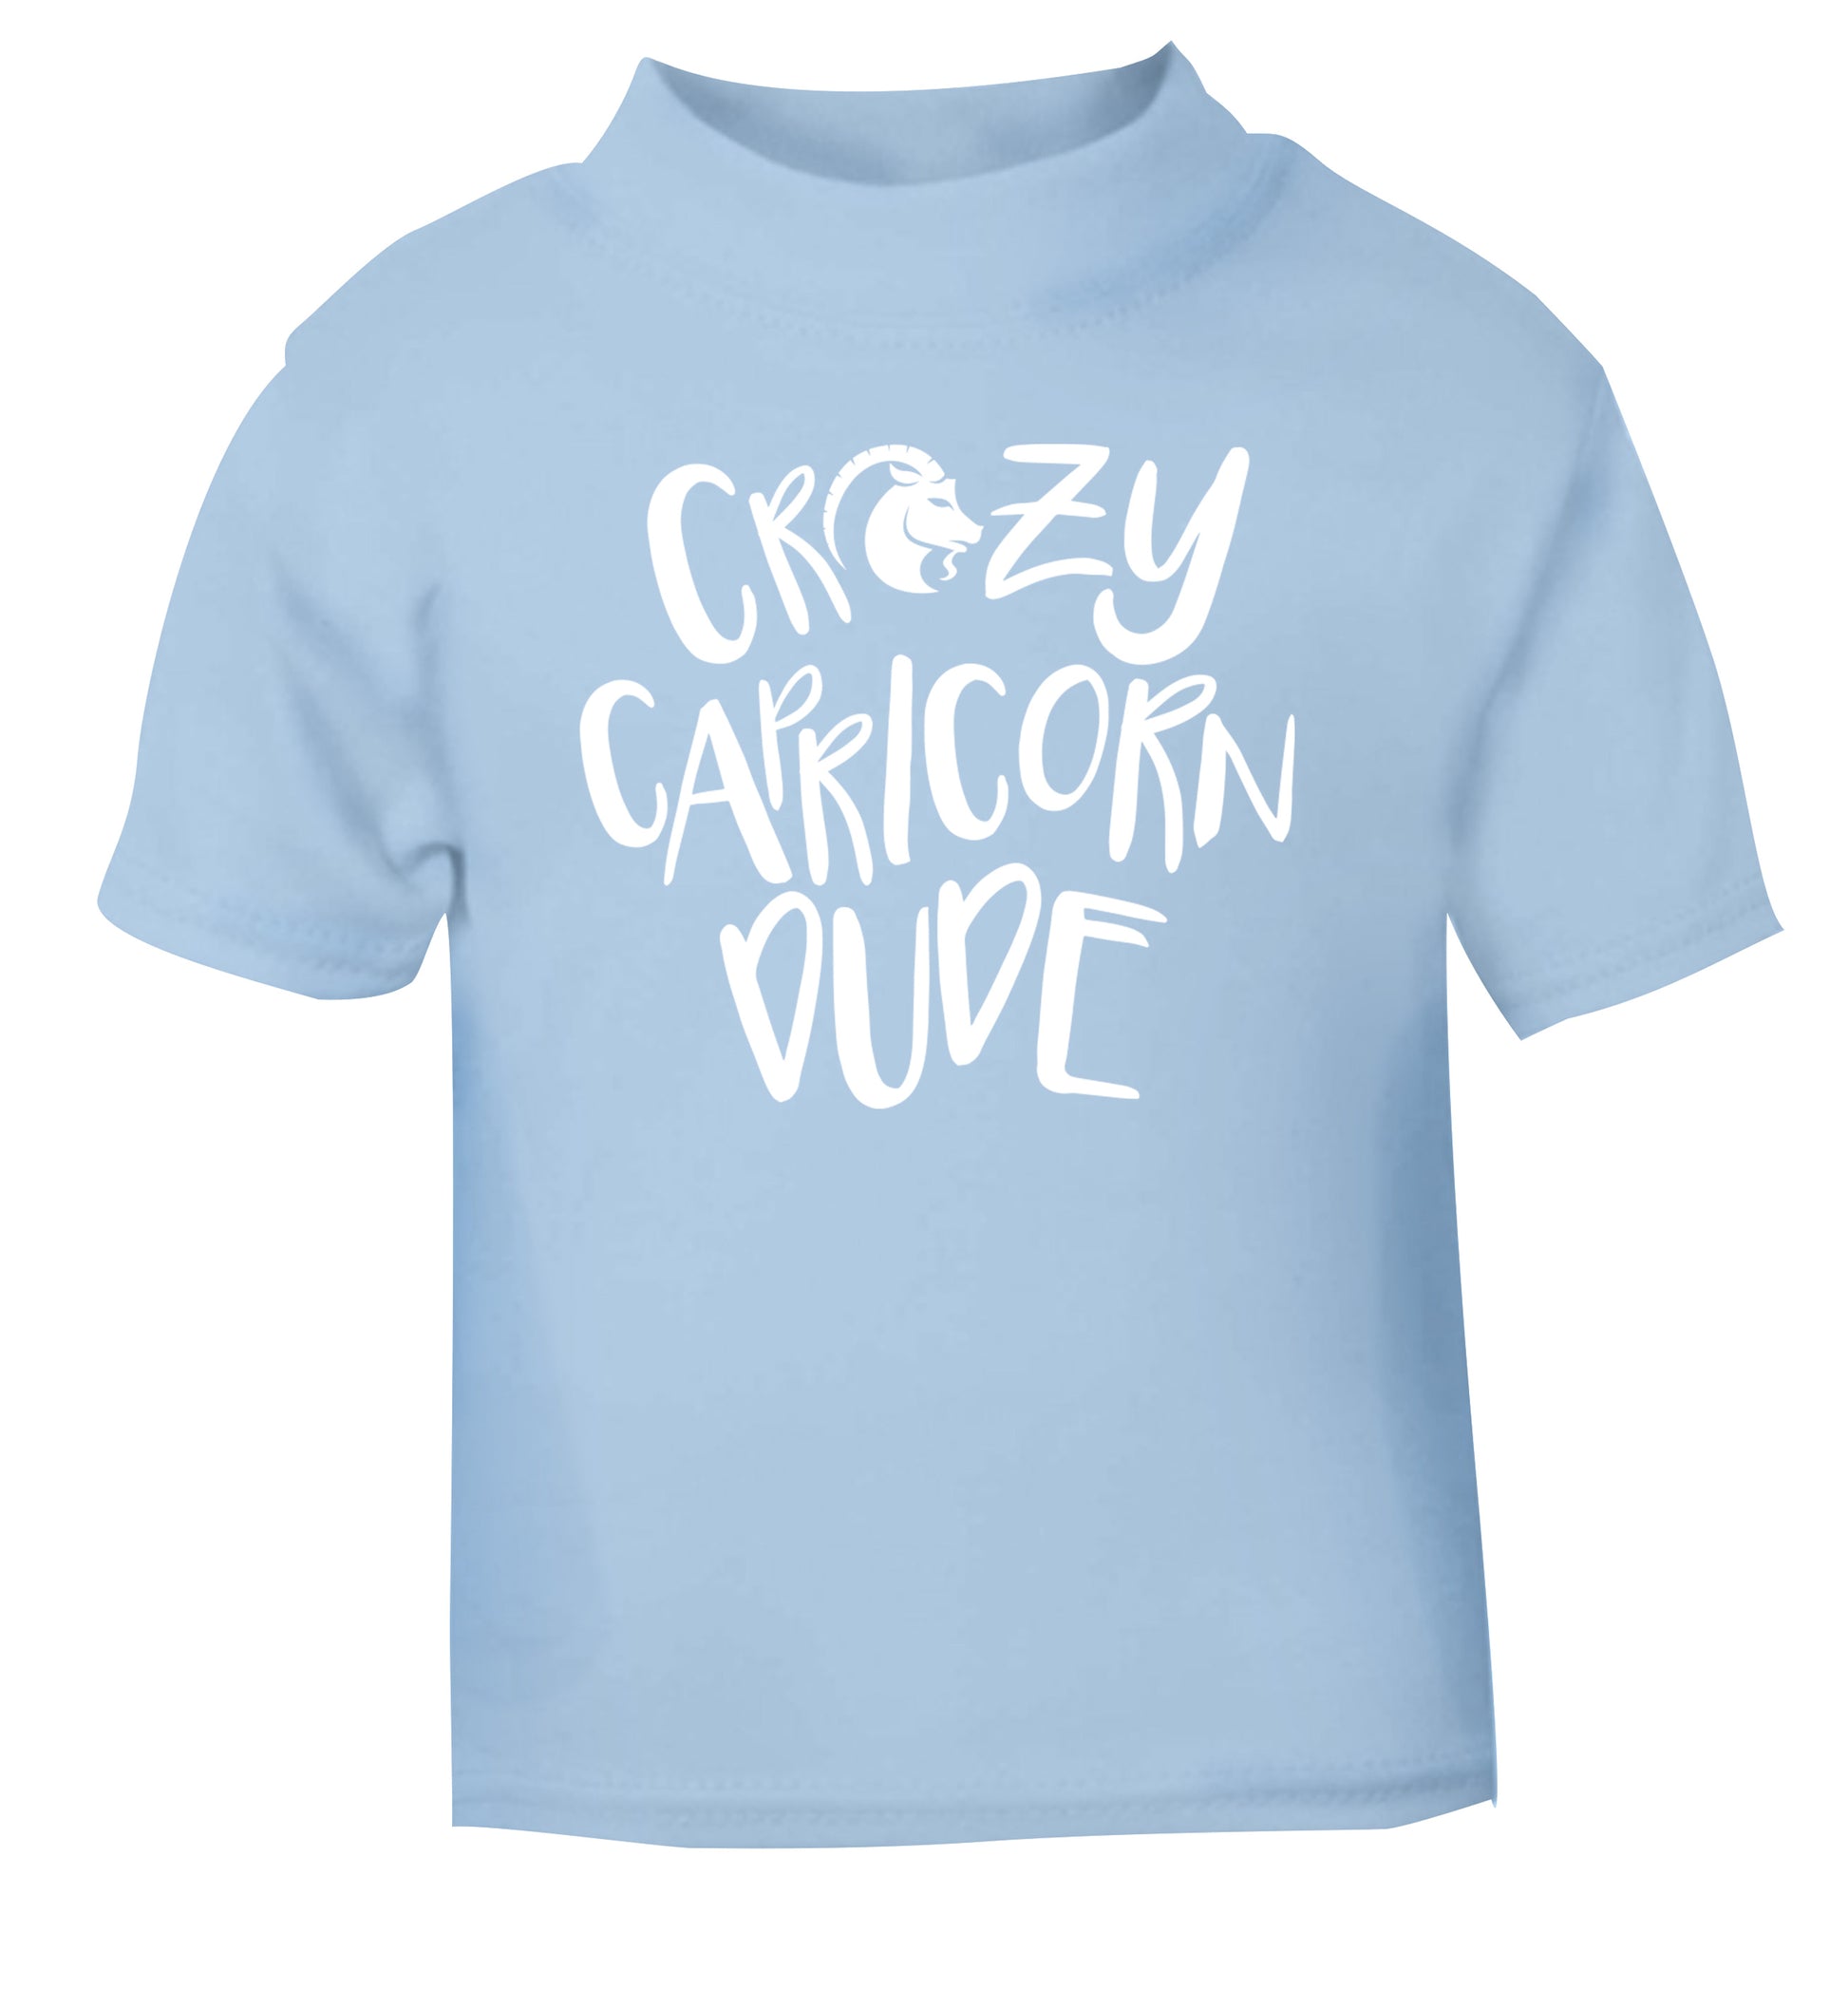 Crazy capricorn dude light blue Baby Toddler Tshirt 2 Years